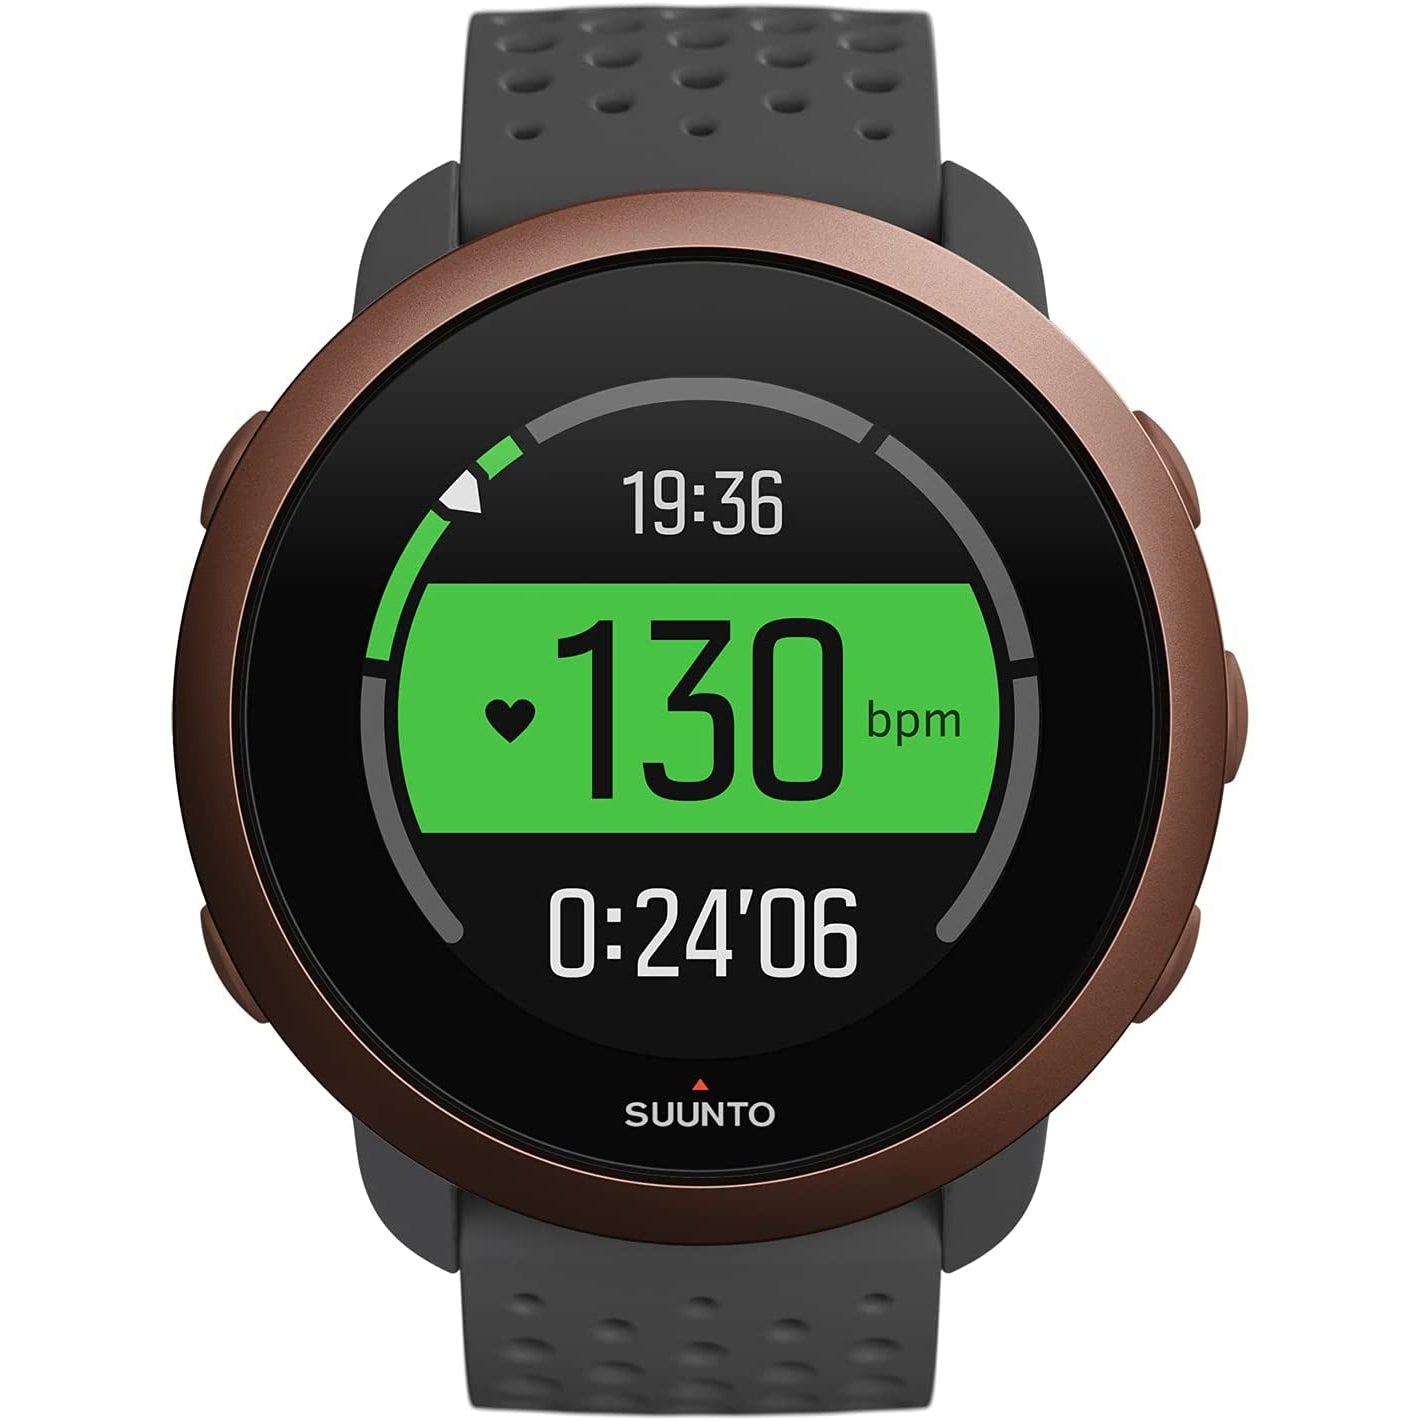 Suunto 3 Sports Watch with Fitness Wrist Band - Grey Copper